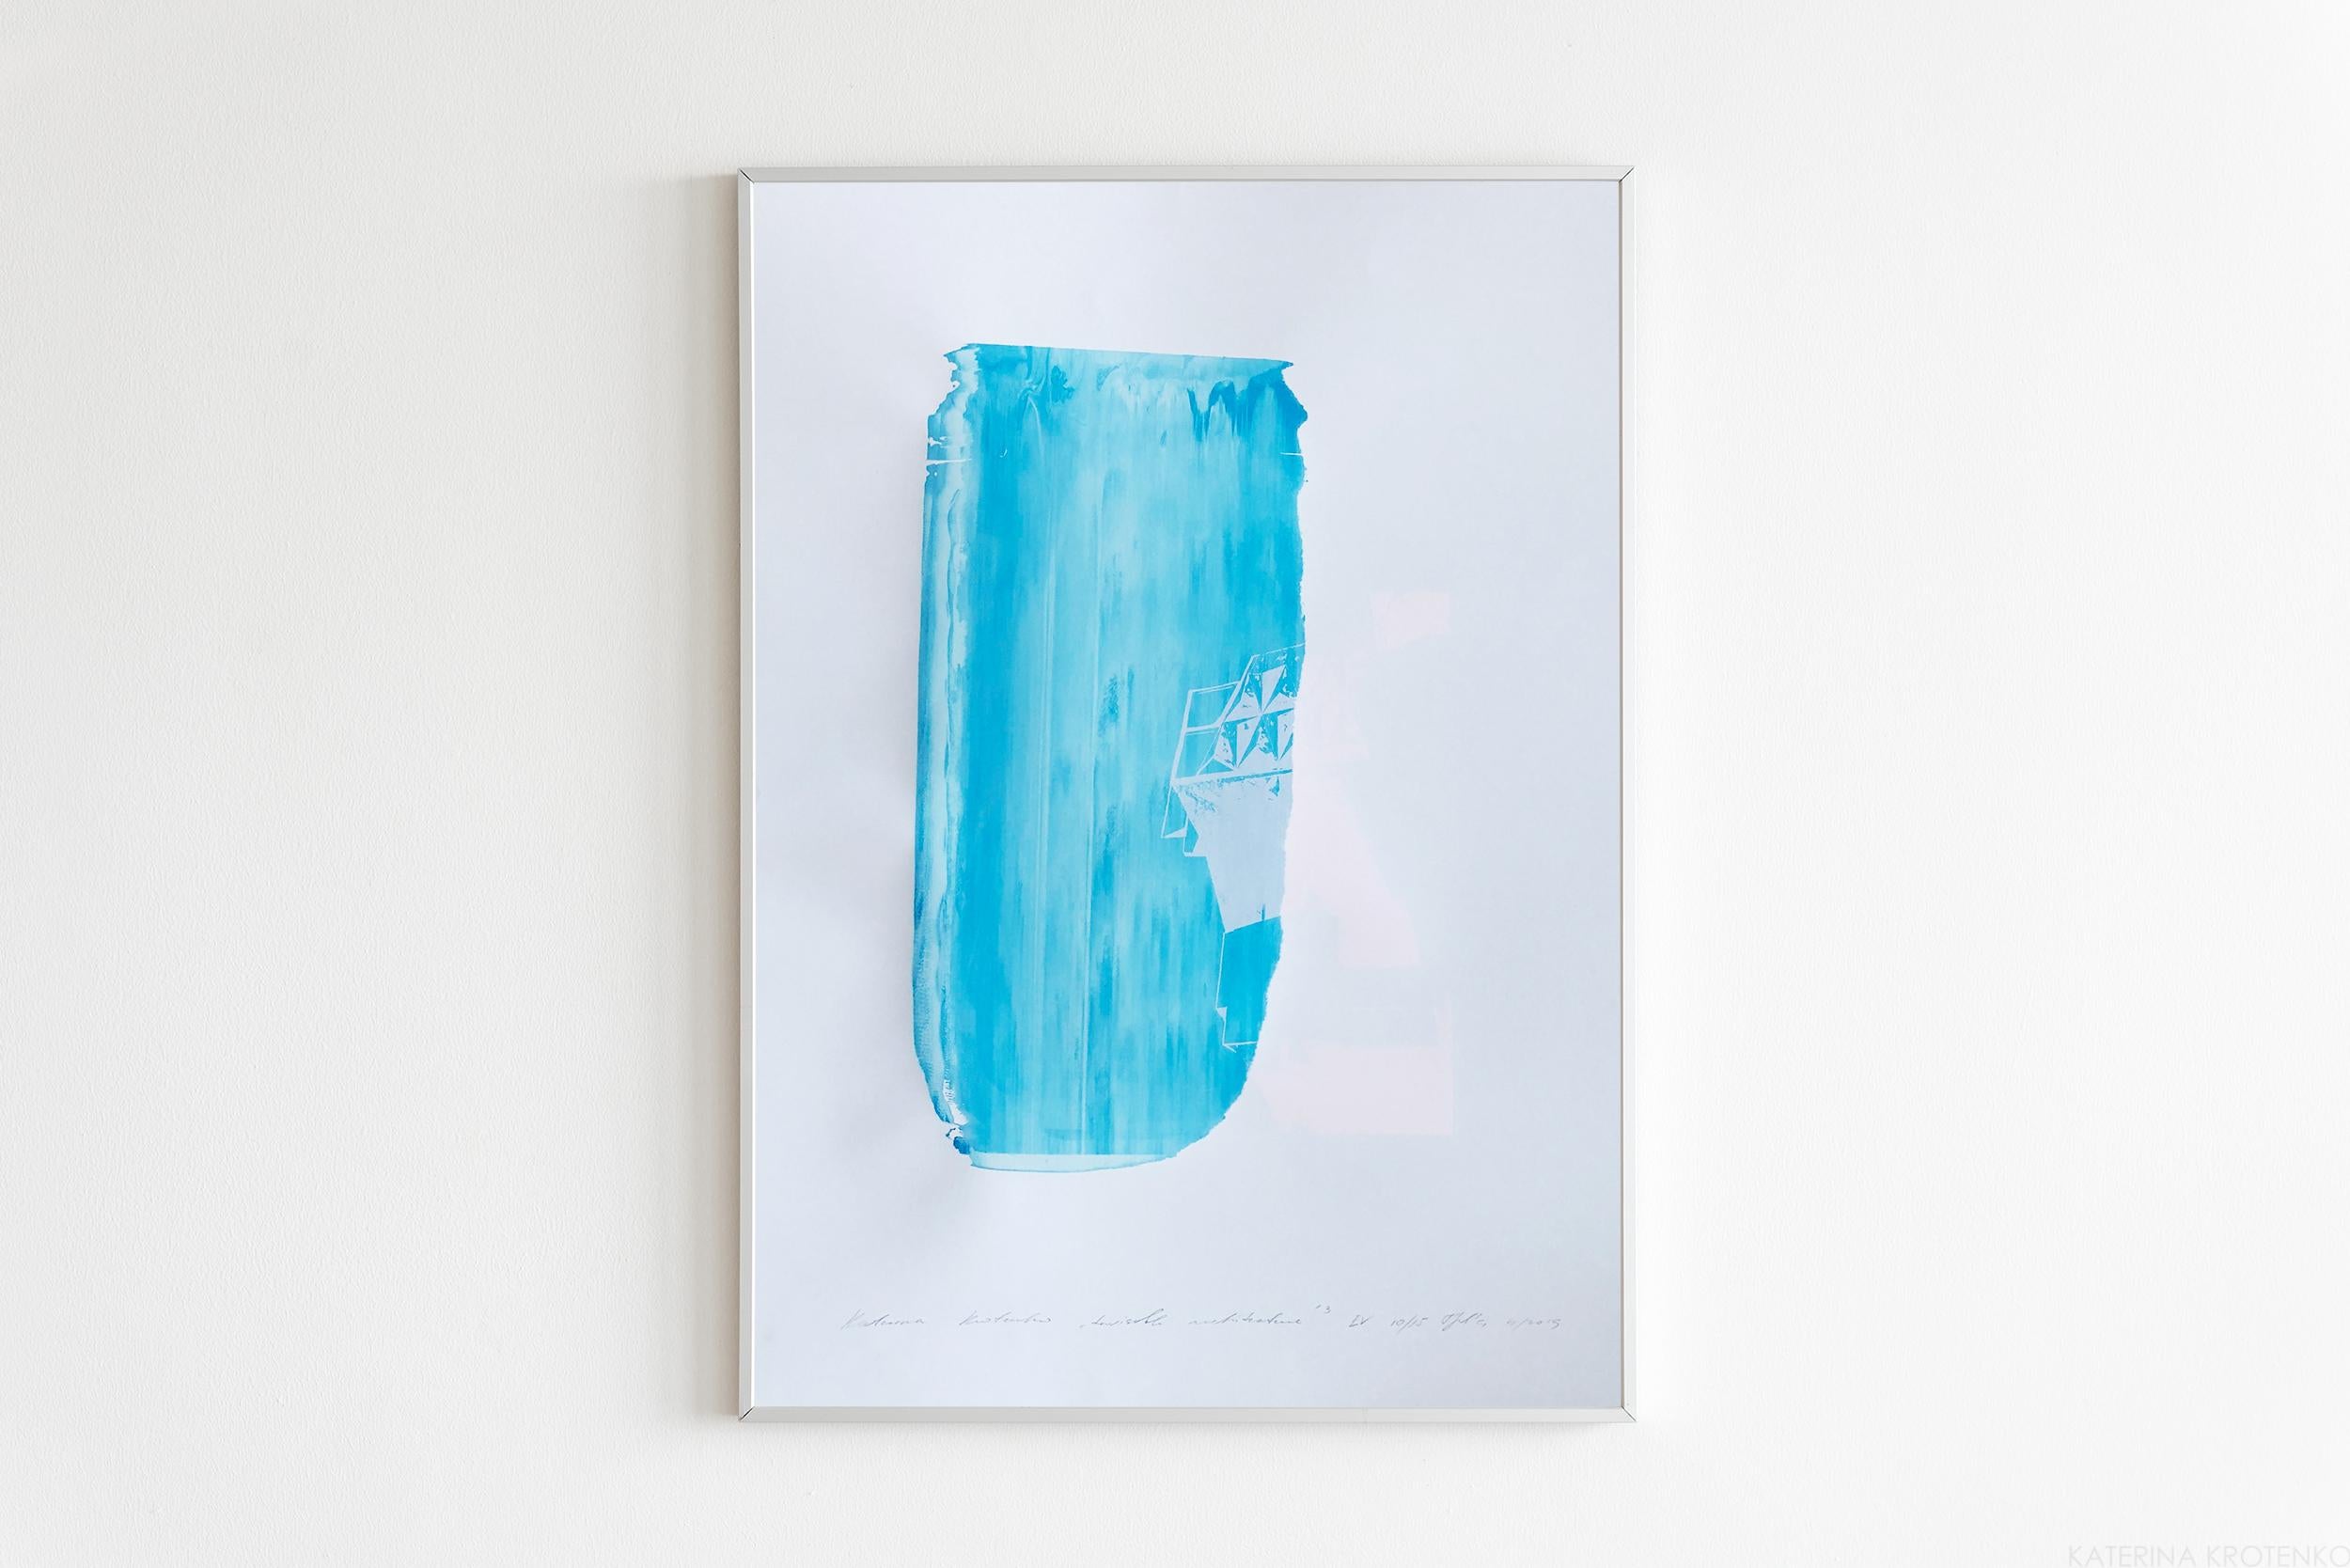 Katerina Krotenko Abstract Print – Invisible treasures # 3 Architektonische Serigrafie Nr. 10 / 15